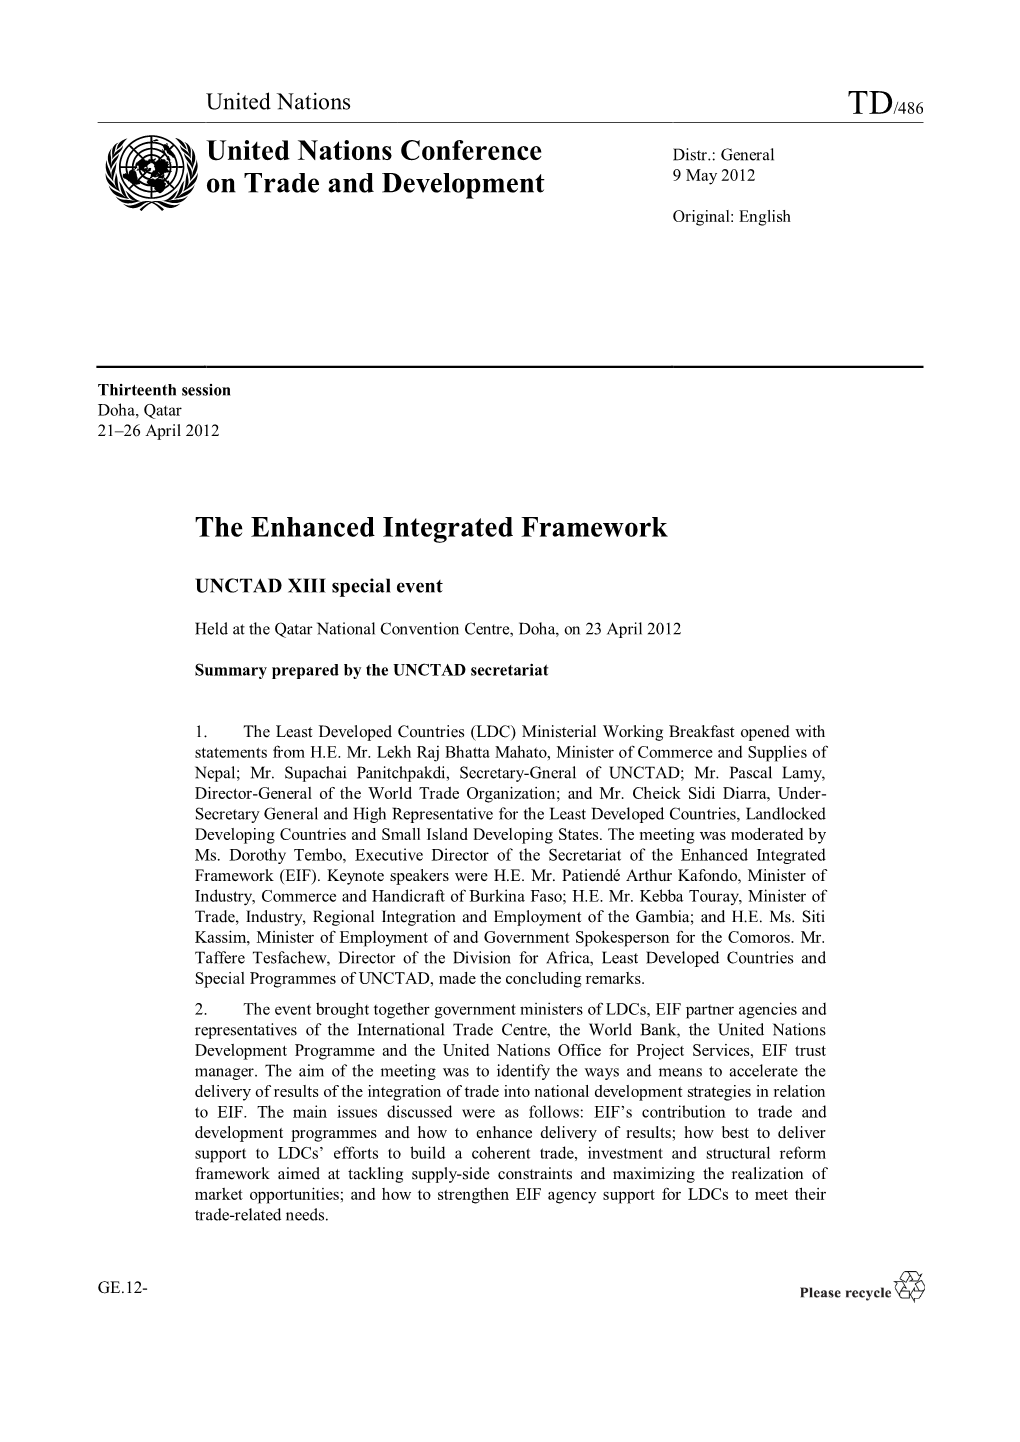 The Enhanced Integrated Framework